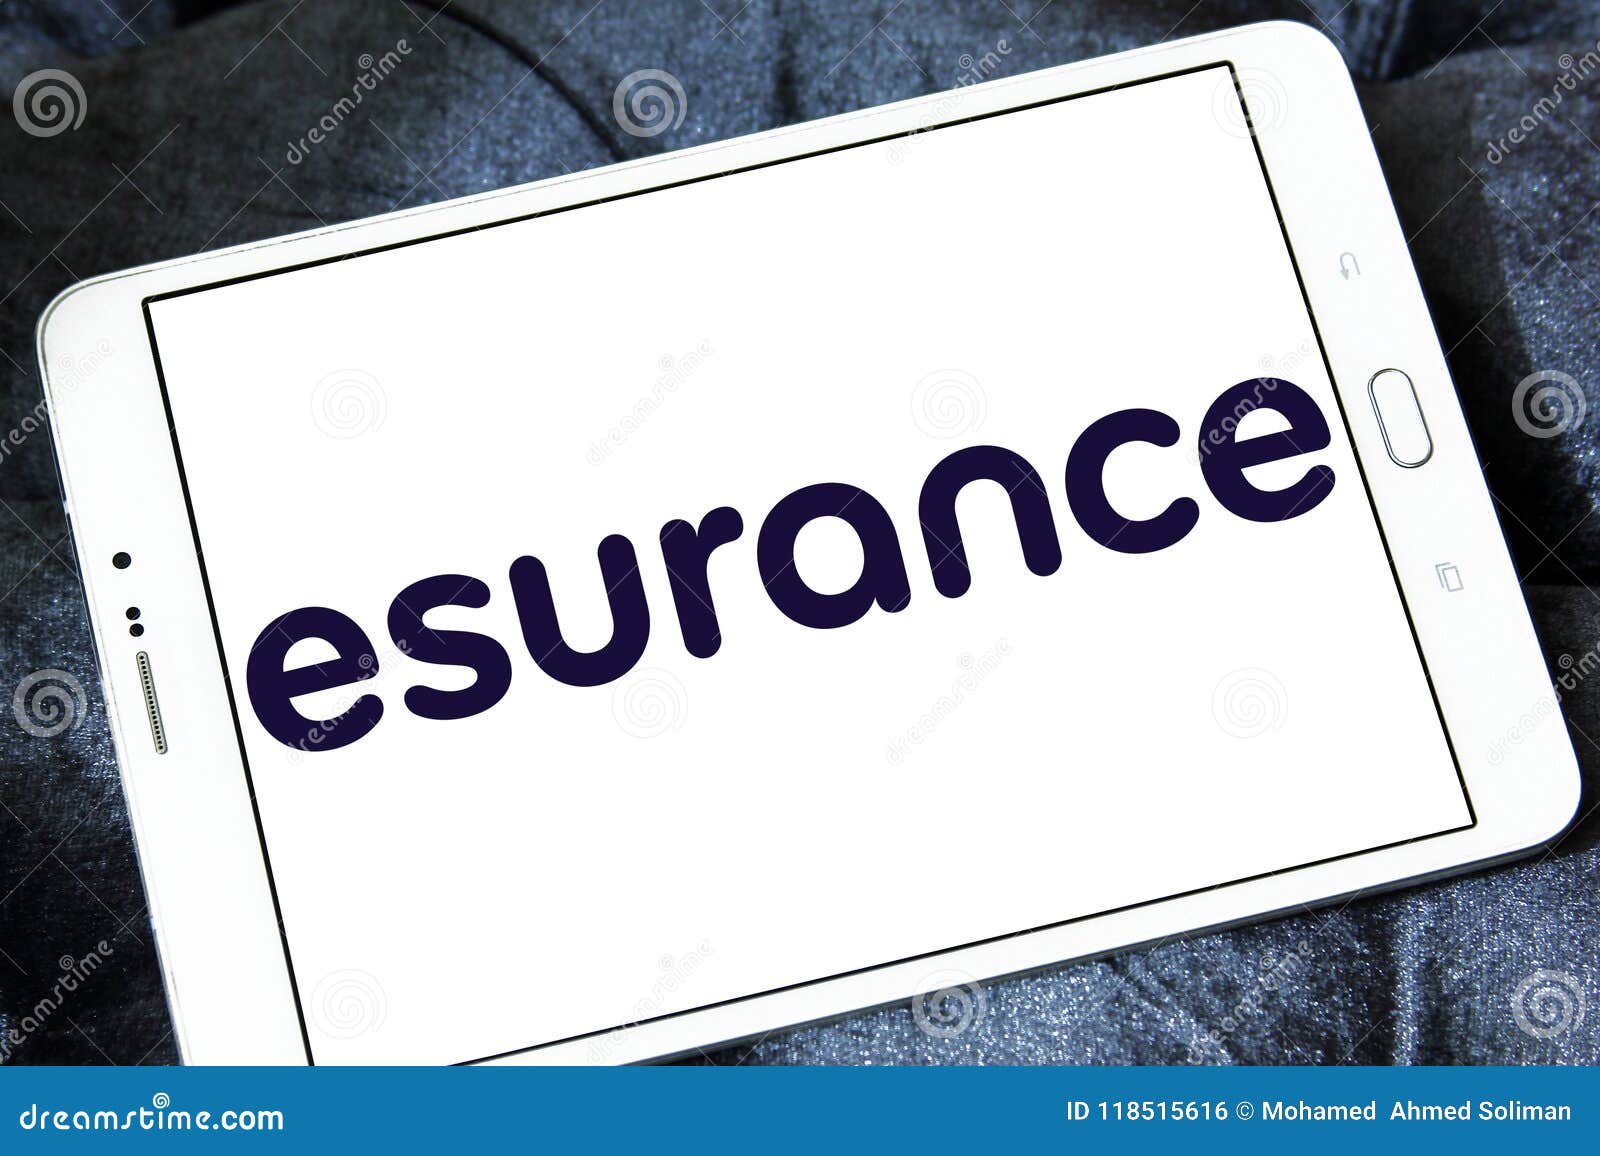 Esurance Insurance Company Logo Editorial Photo Image Of Phone Commercial 118515616